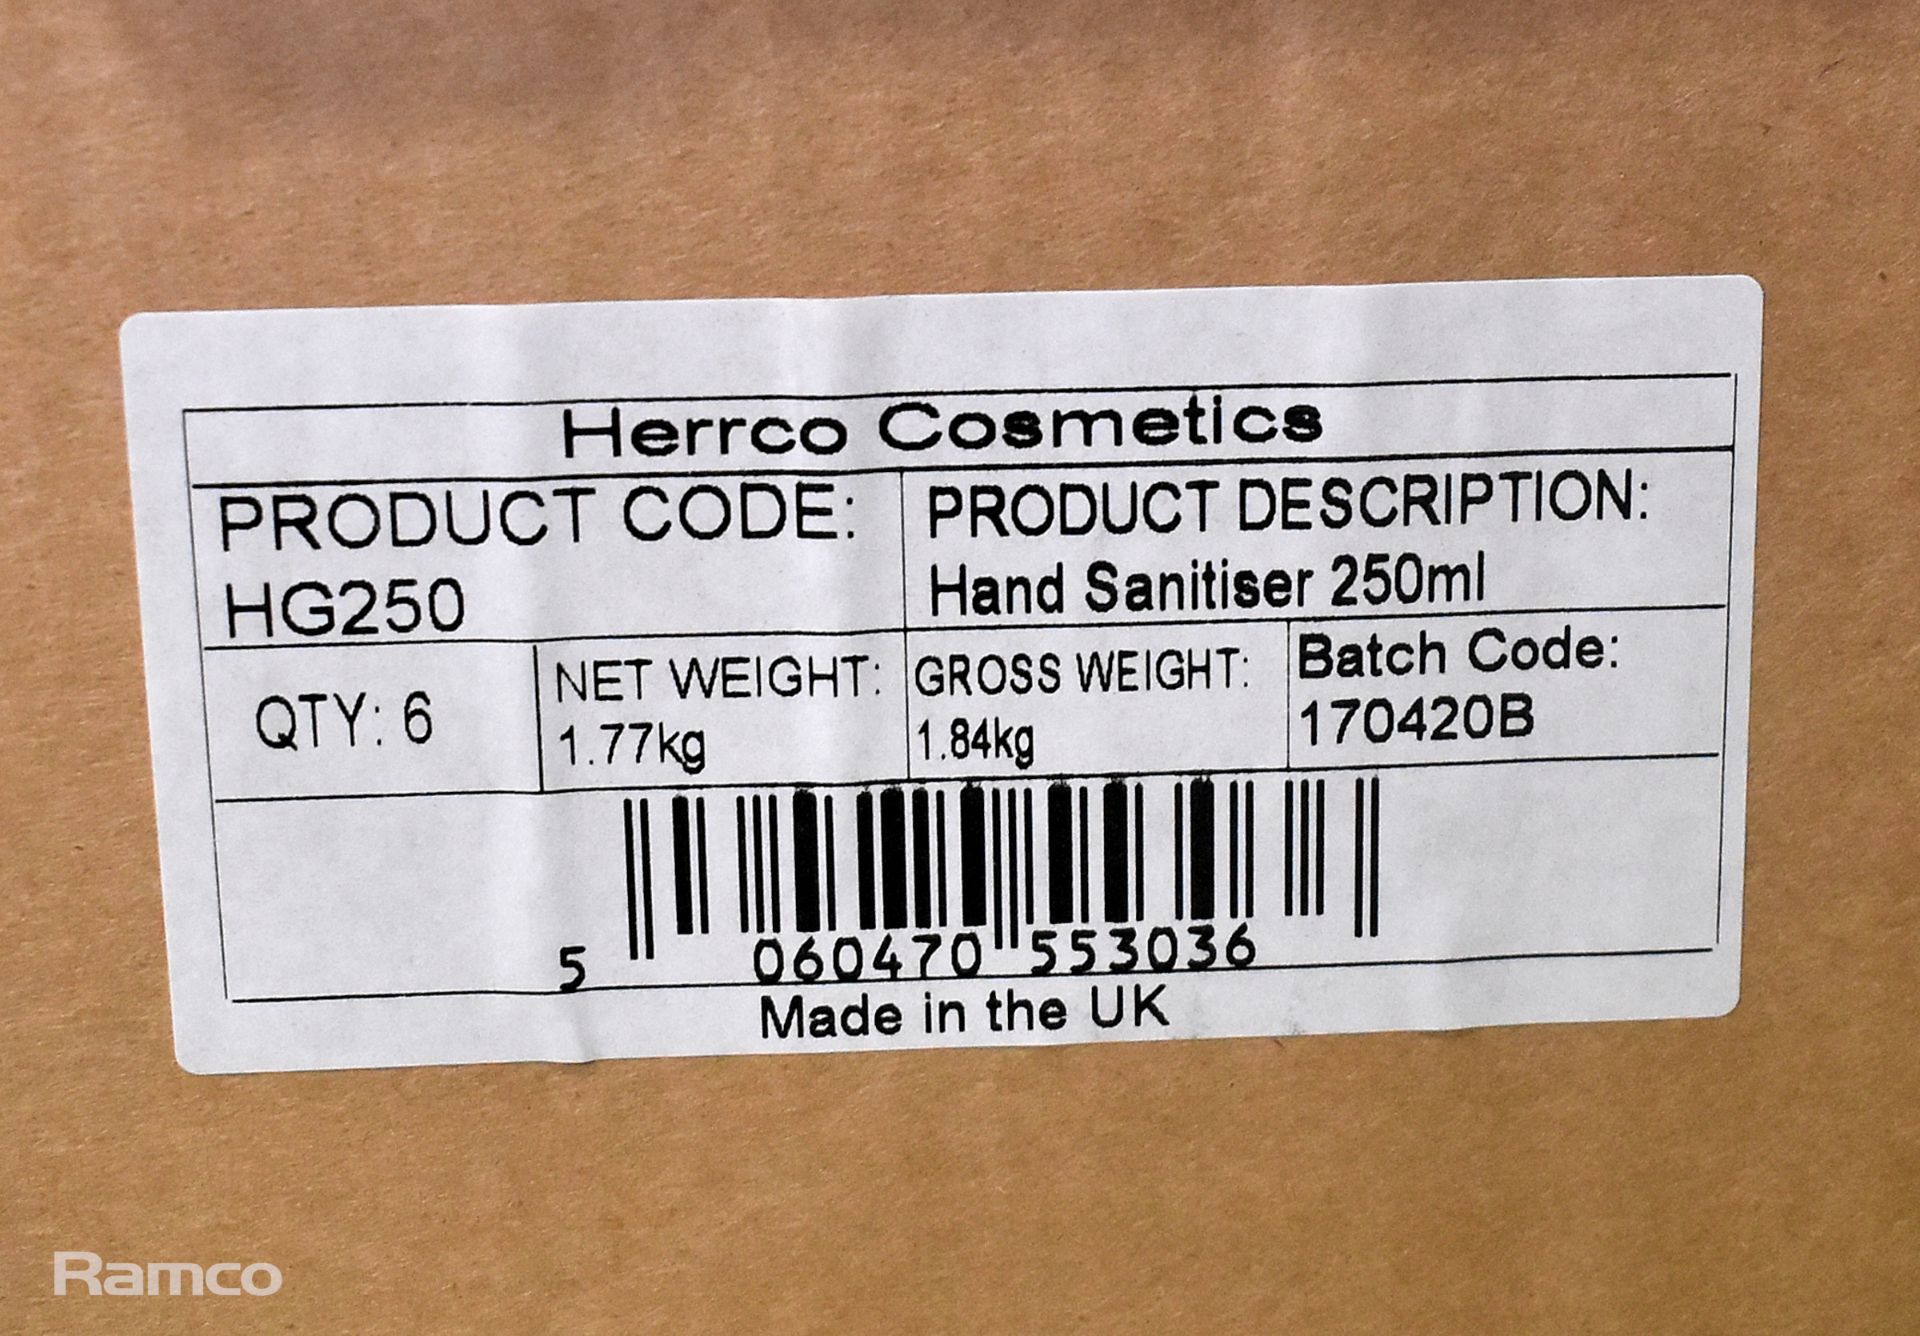 8x boxes of Herrco Cosmetics anti-bacterial hand gel - 250ml - 6 bottles per box - Image 4 of 6